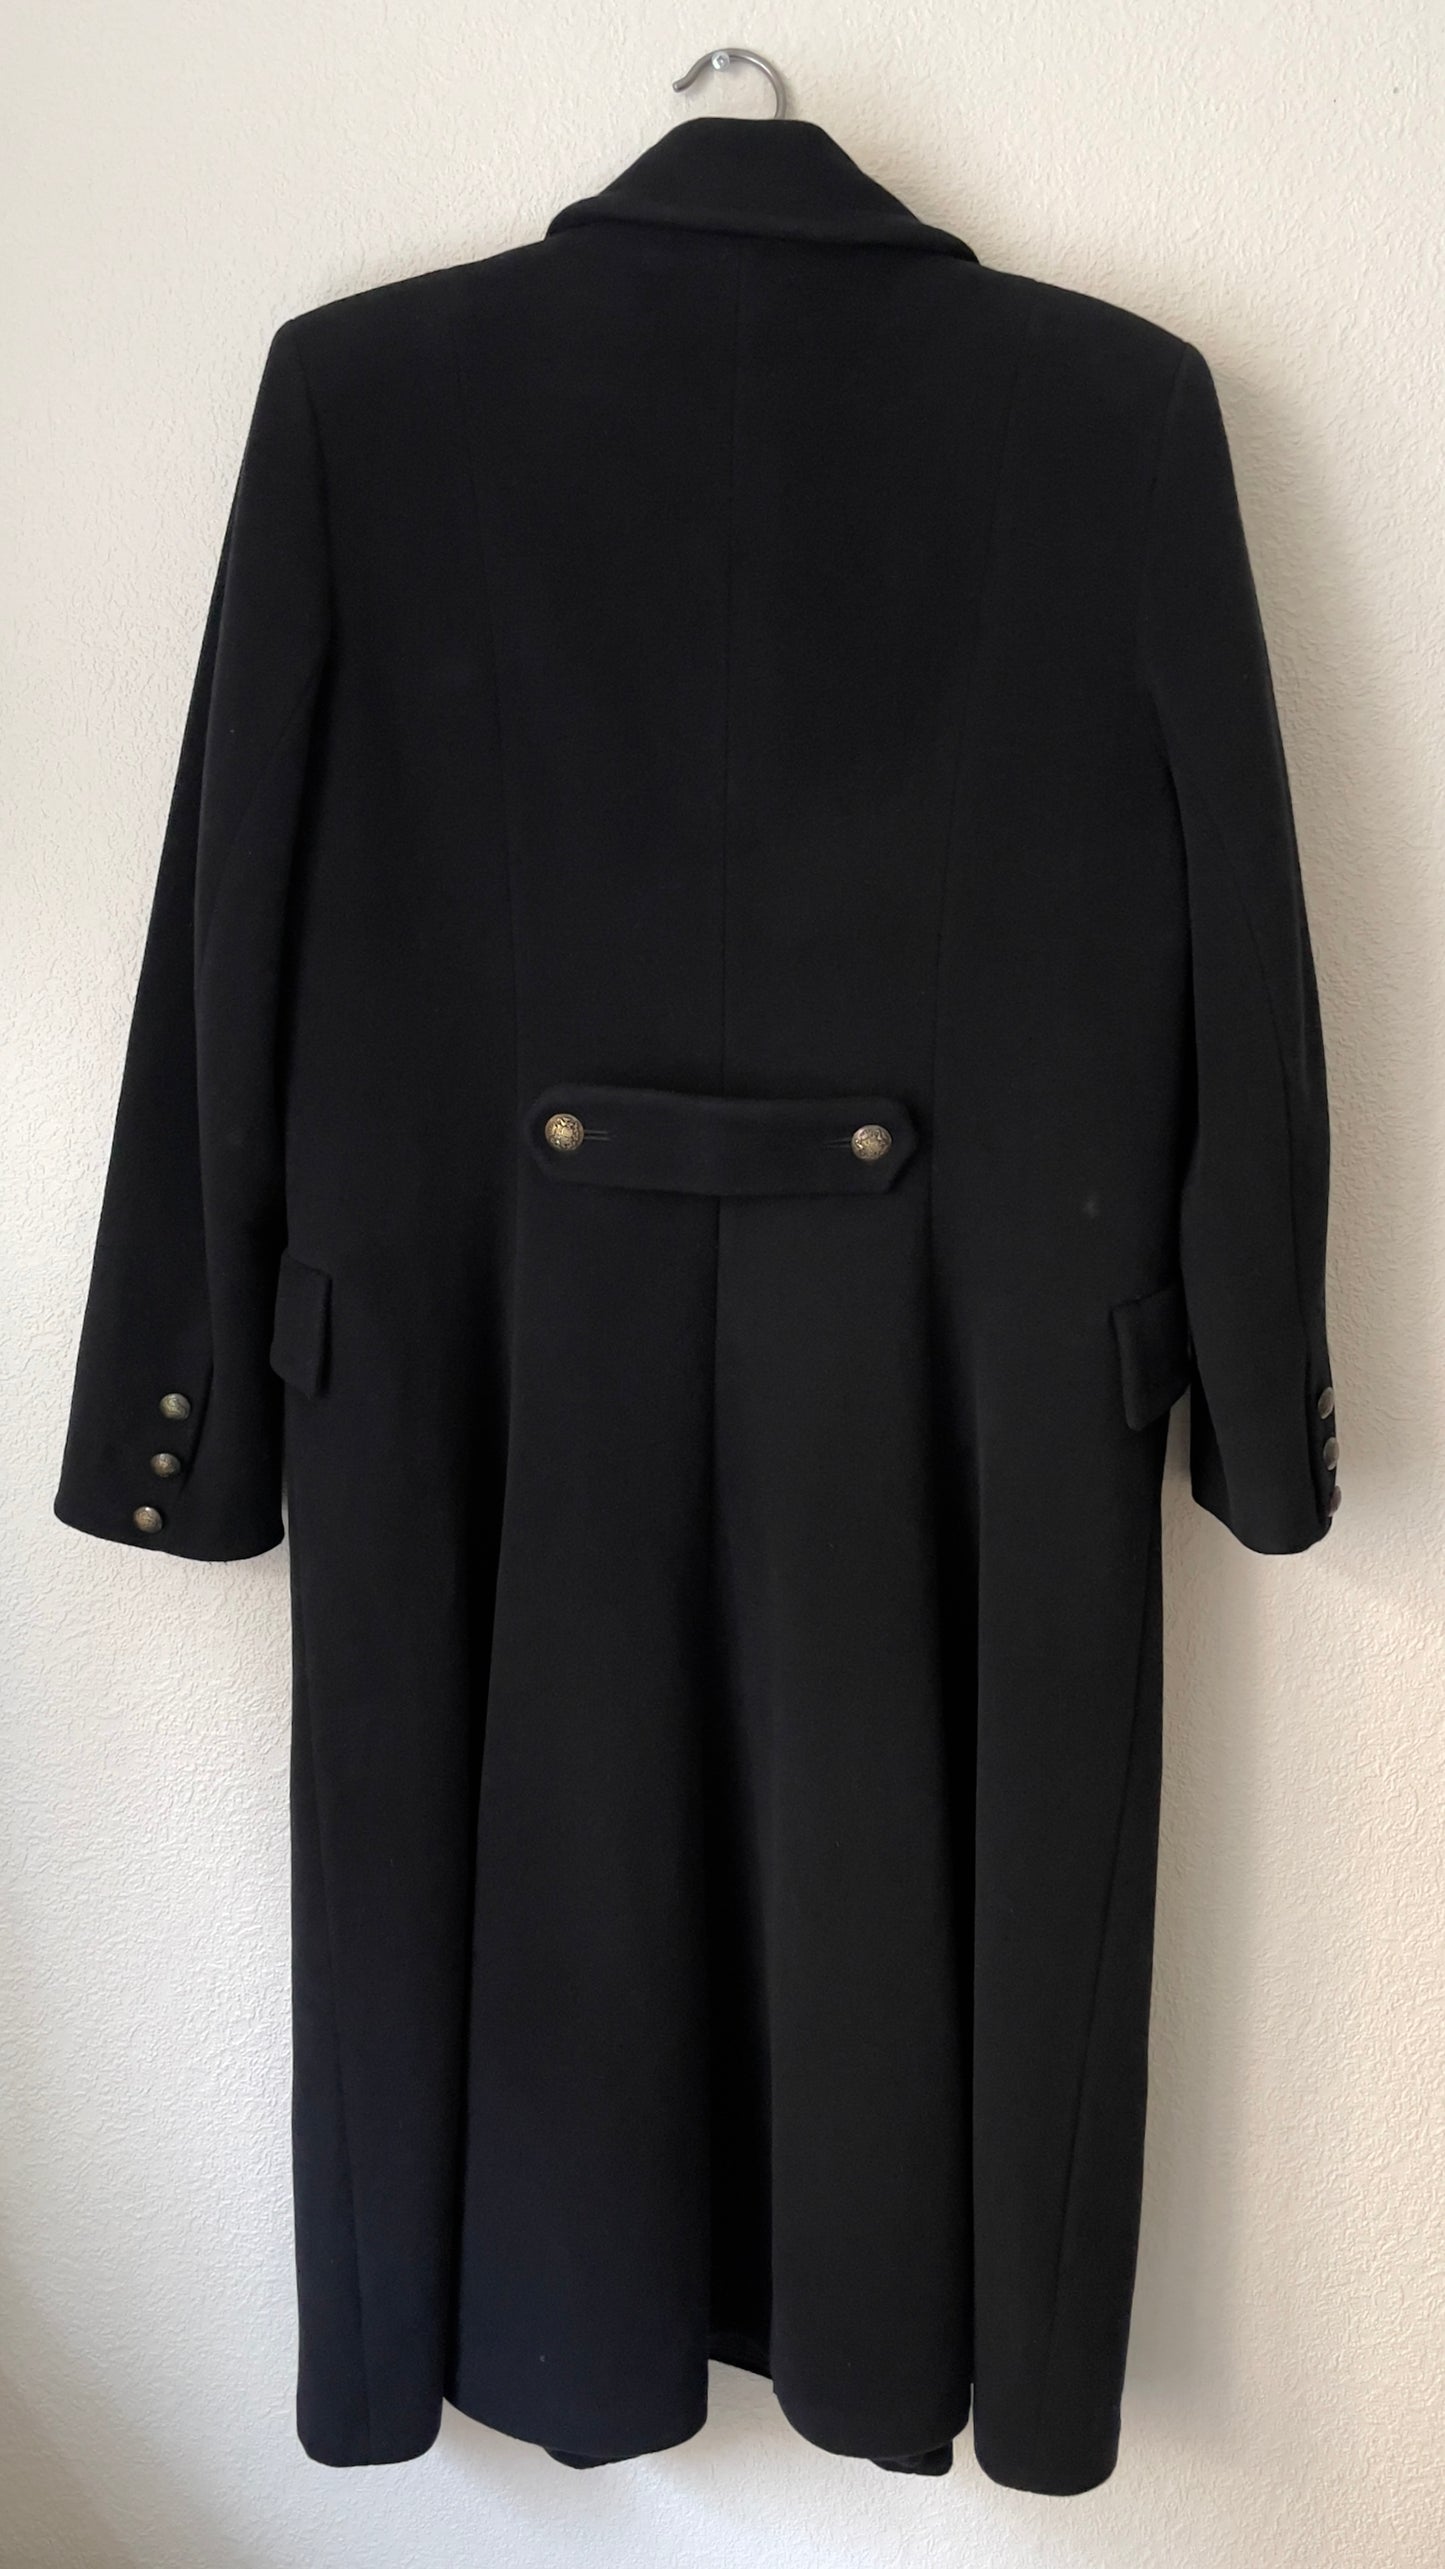 Vintage Double-breasted Black Wool Coat